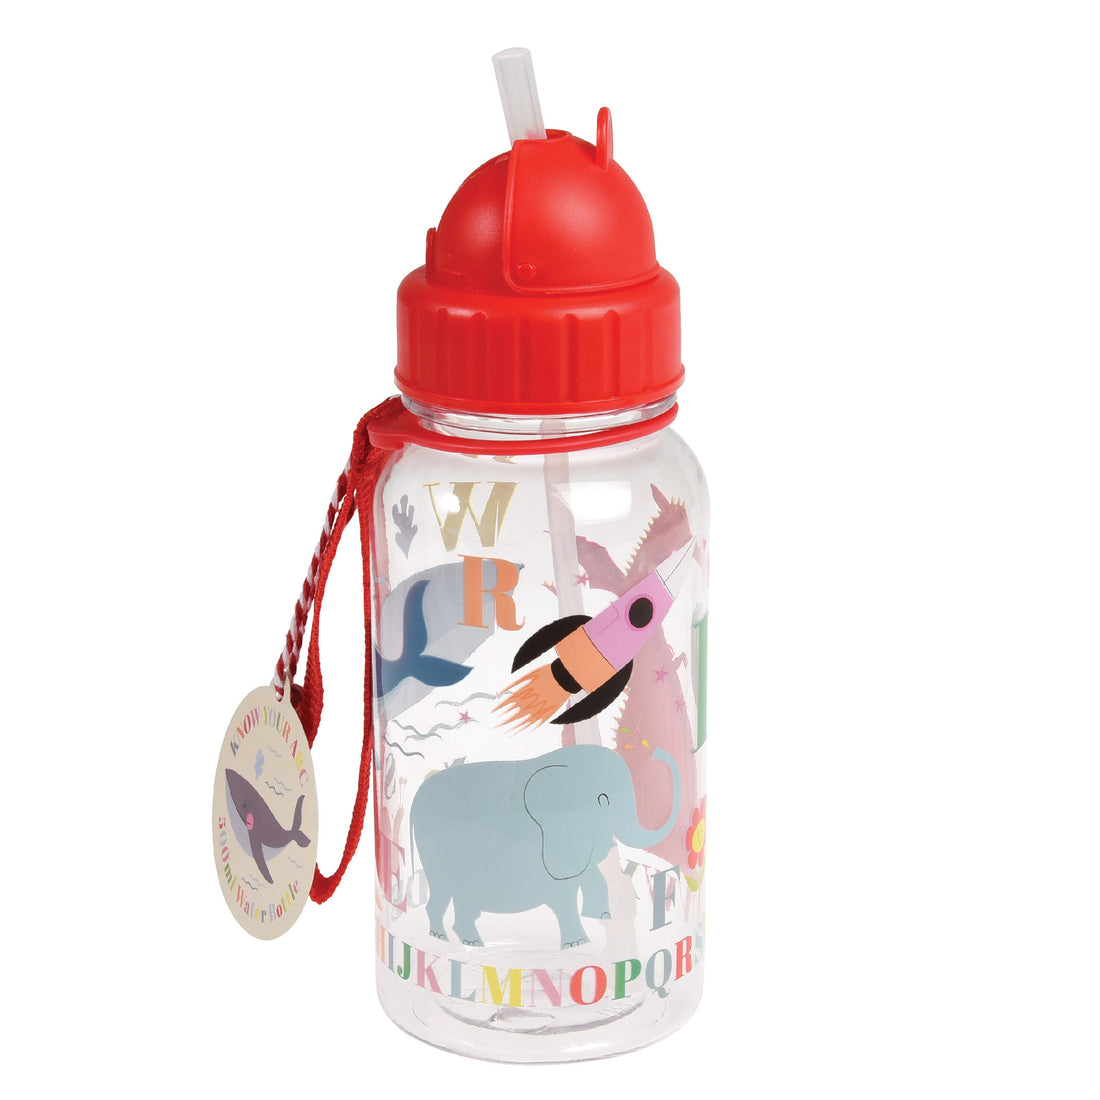 rex-abc-design-kids-water-bottle- (2)